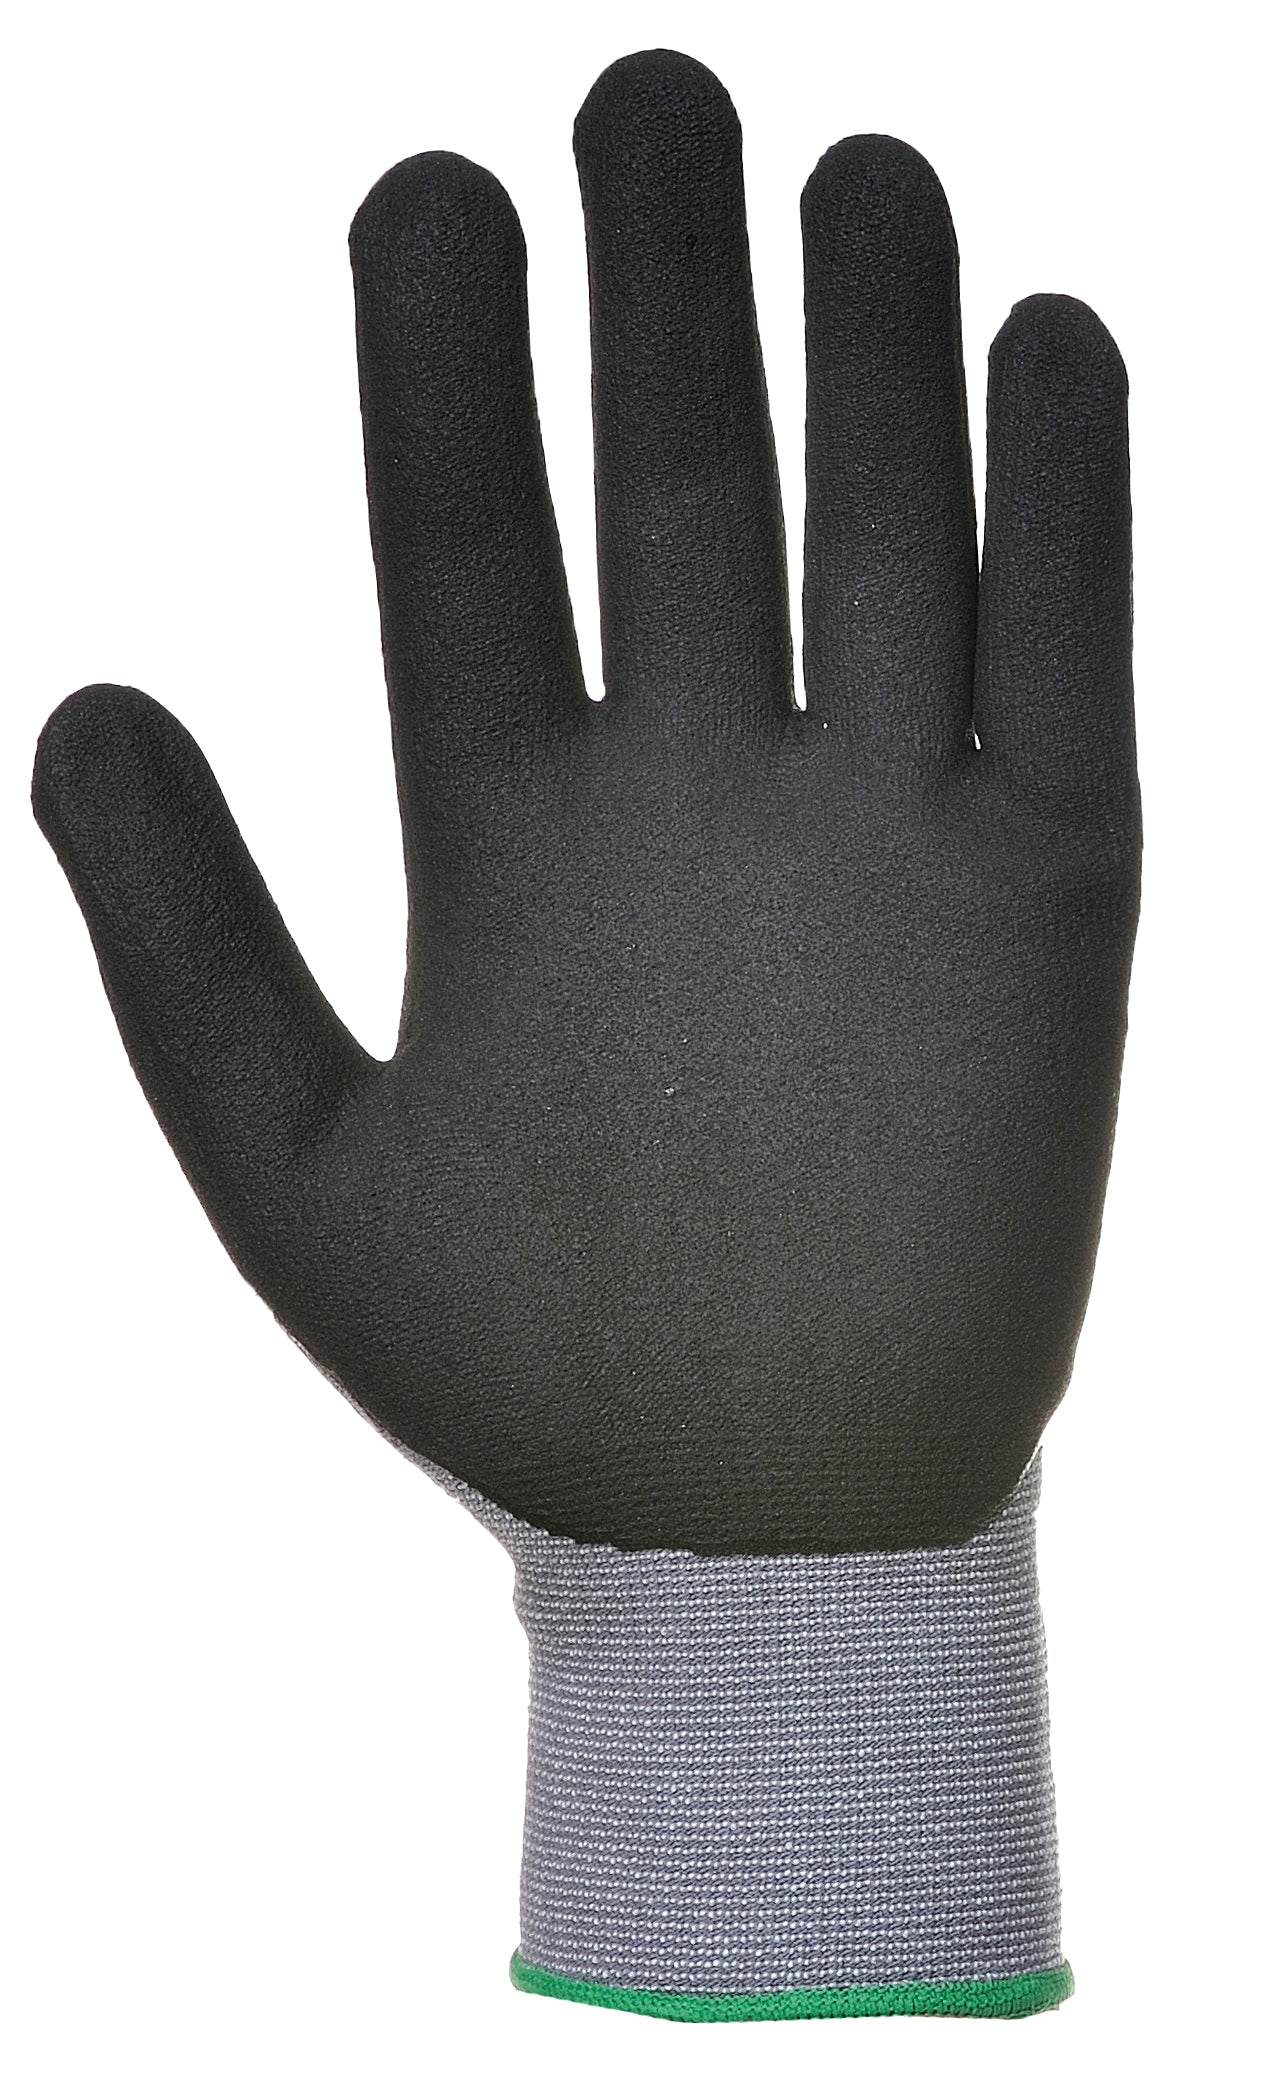 Dermiflex Glove Grey/Black - A350 Palm 